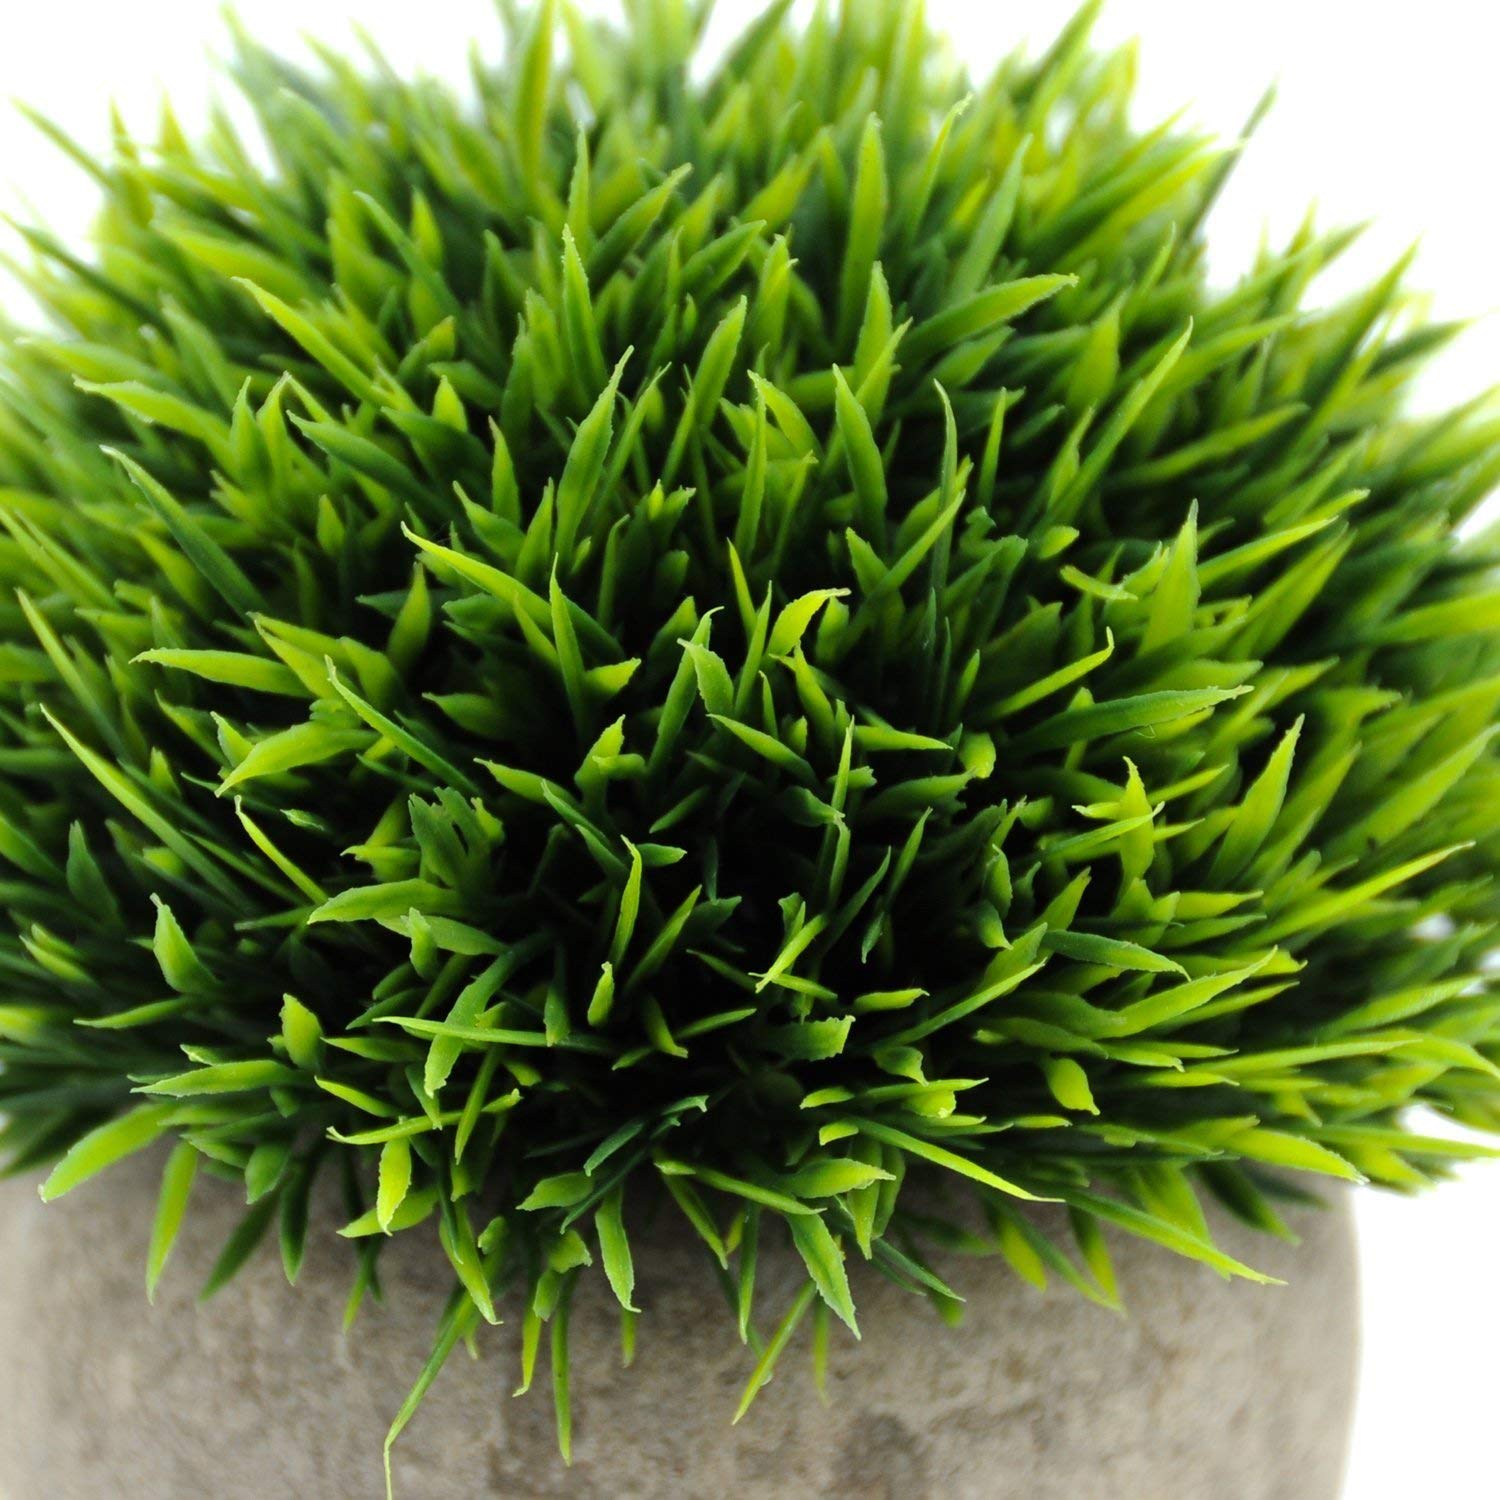 Amazon.com: Velener Mini Plastic Fake Green Grass of Plants with ...